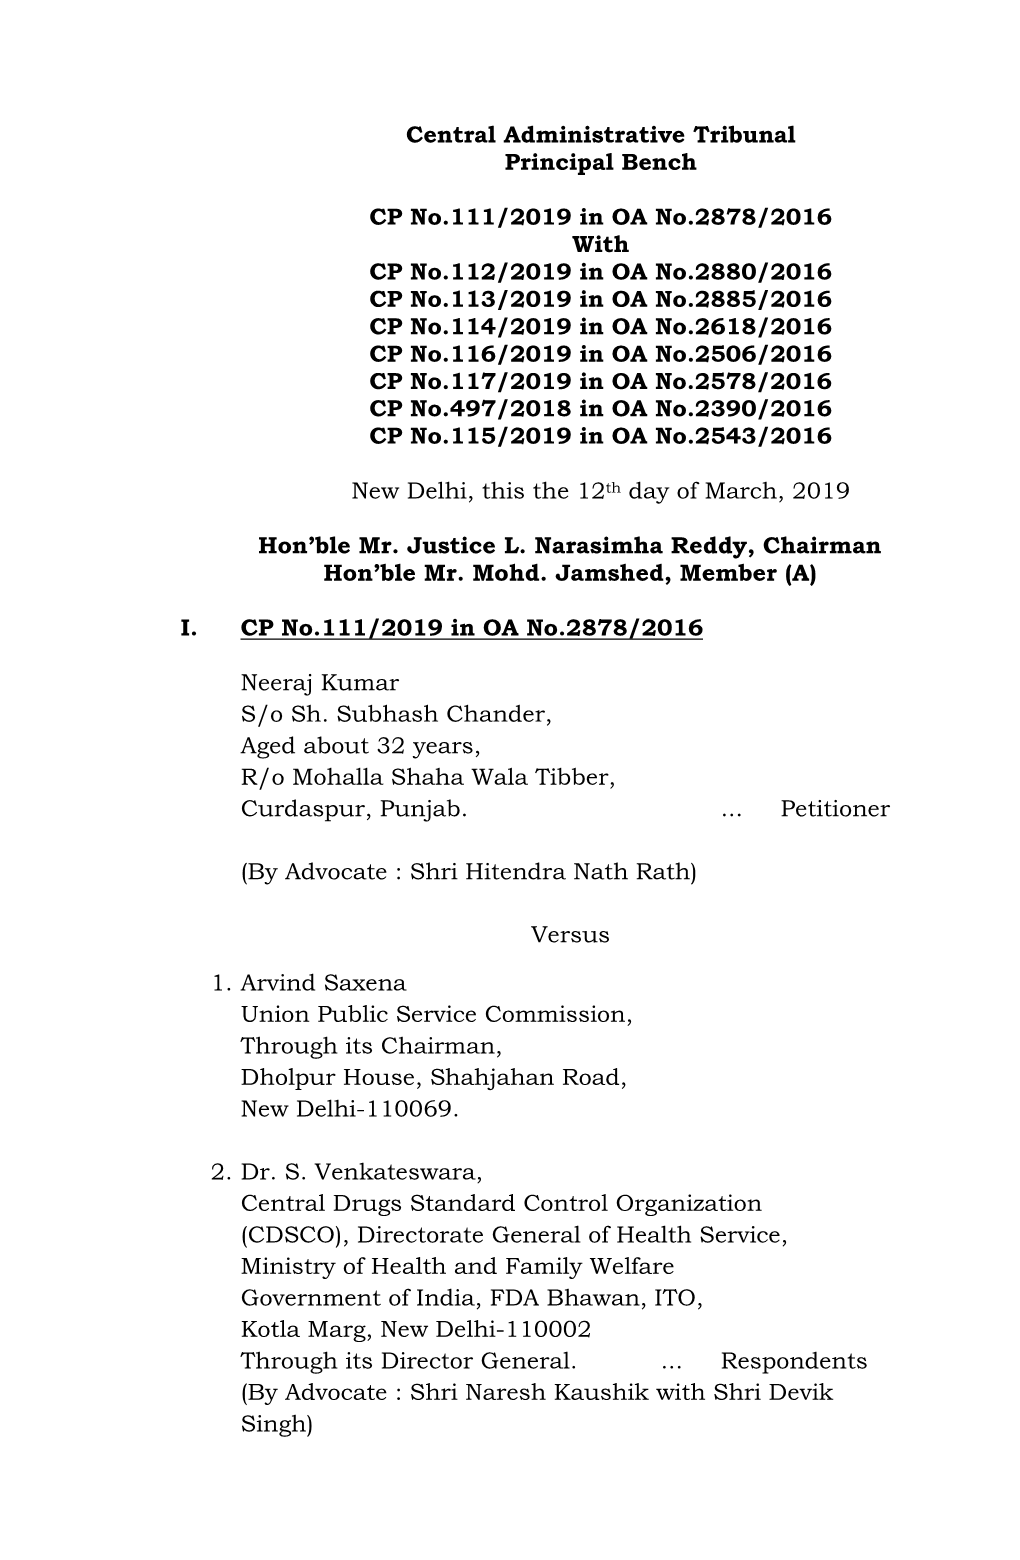 Central Administrative Tribunal Principal Bench CP No.111/2019 In